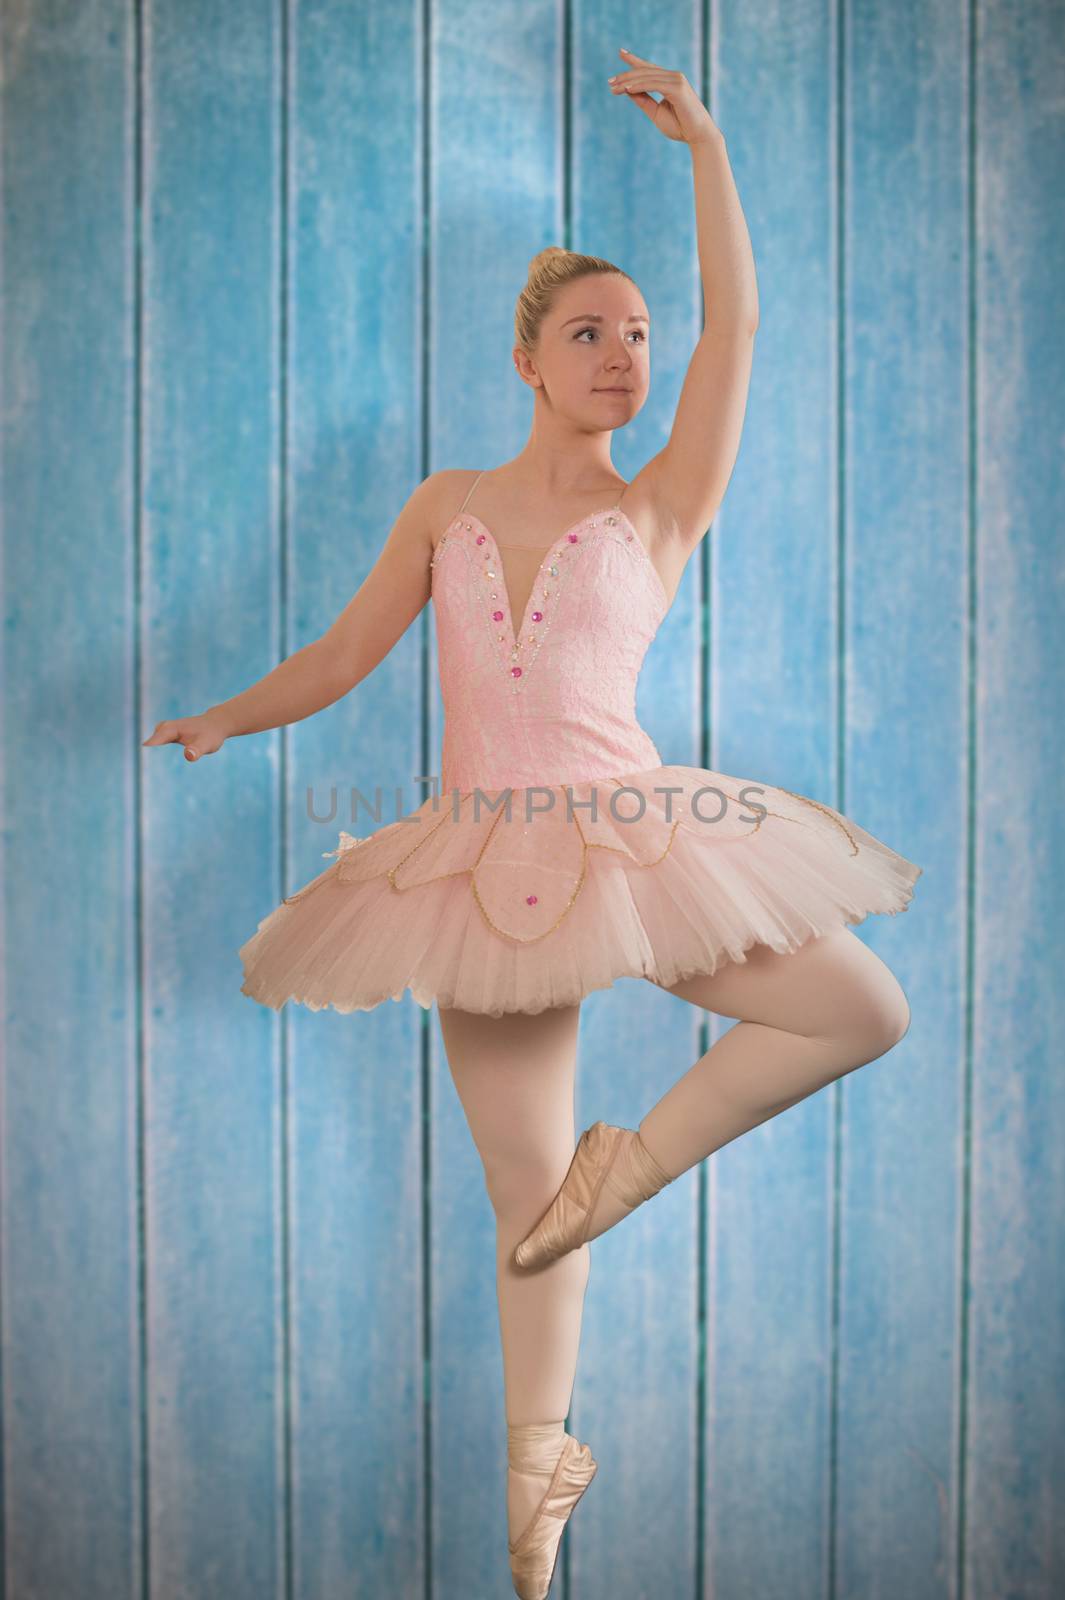 Pretty ballerina dancing against wooden planks